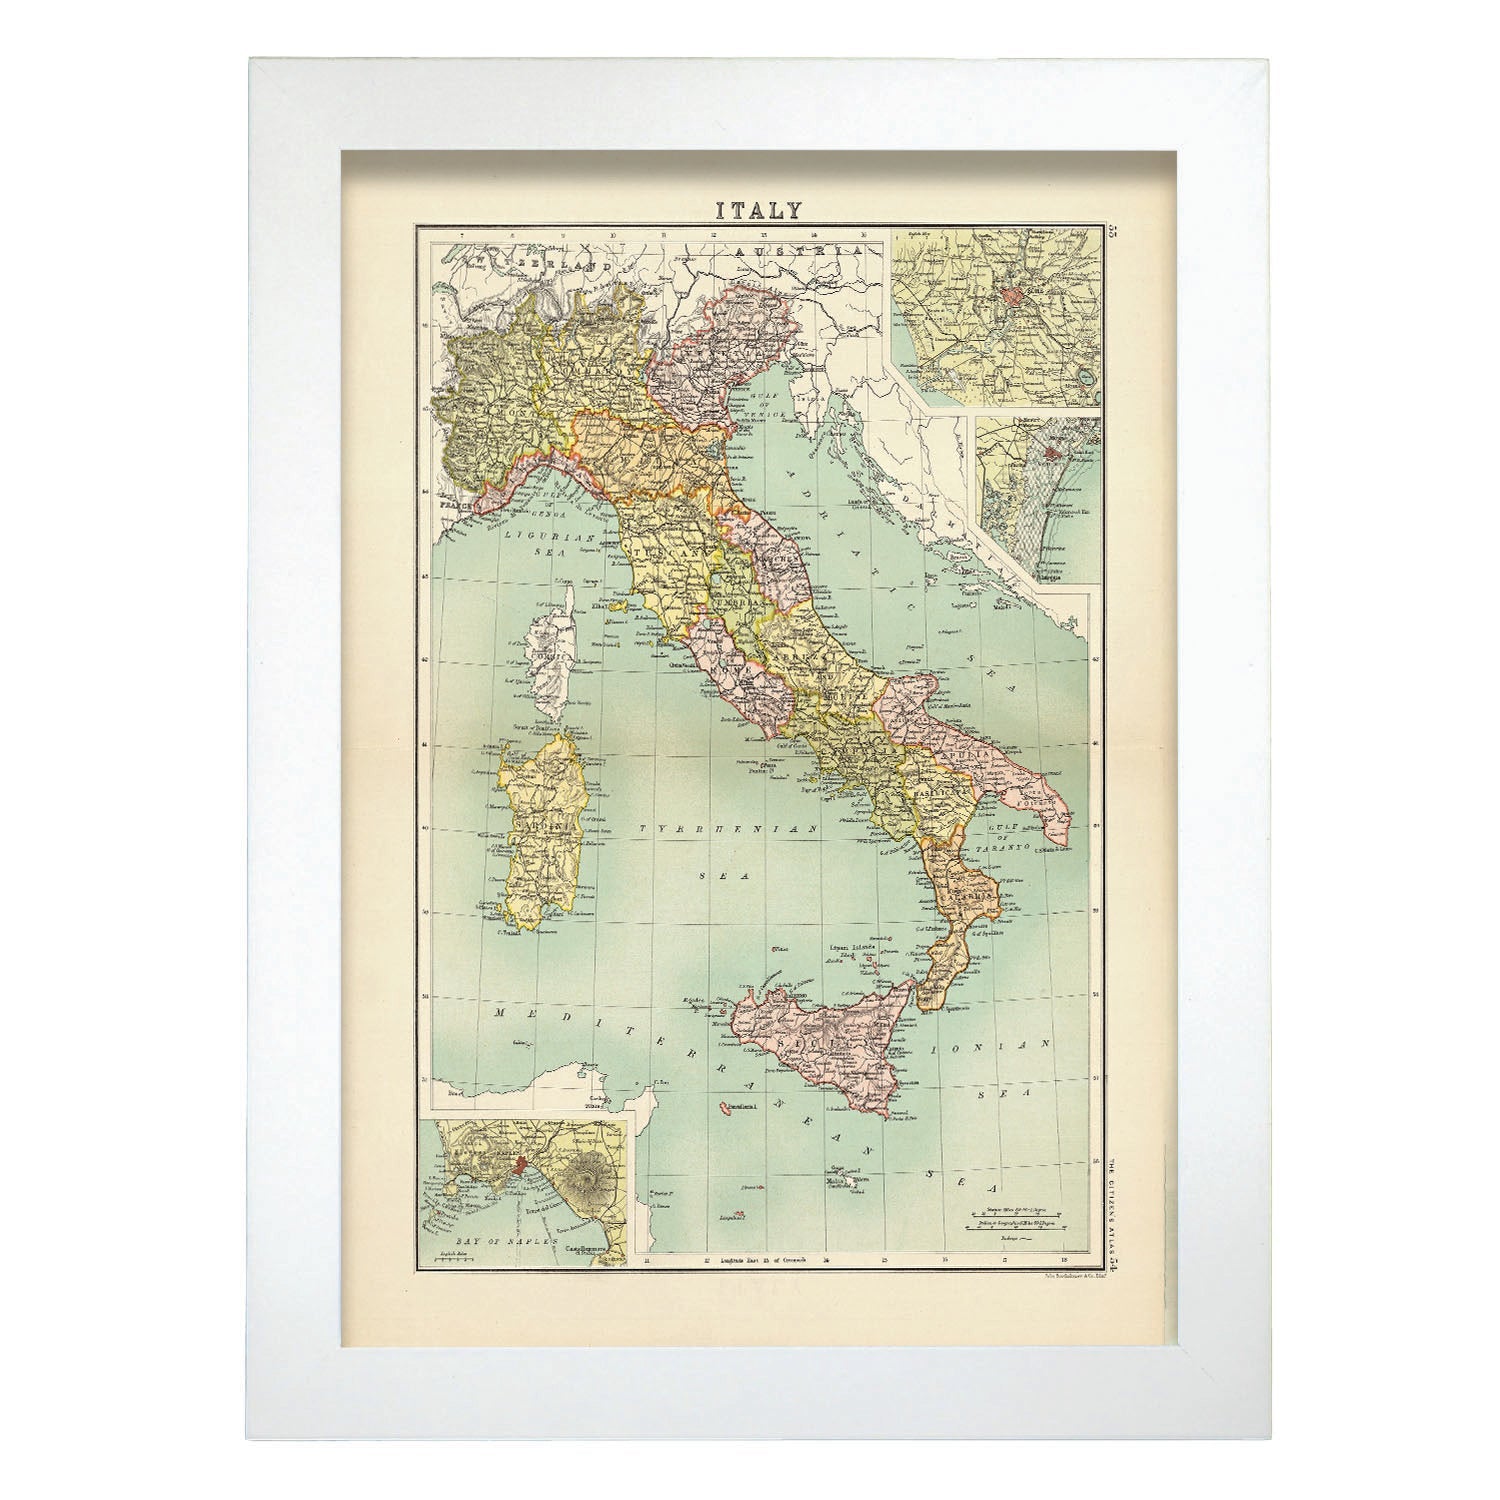 Vintage Map of Italy Citizen Atlas-Artwork-Nacnic-A4-Marco Blanco-Nacnic Estudio SL